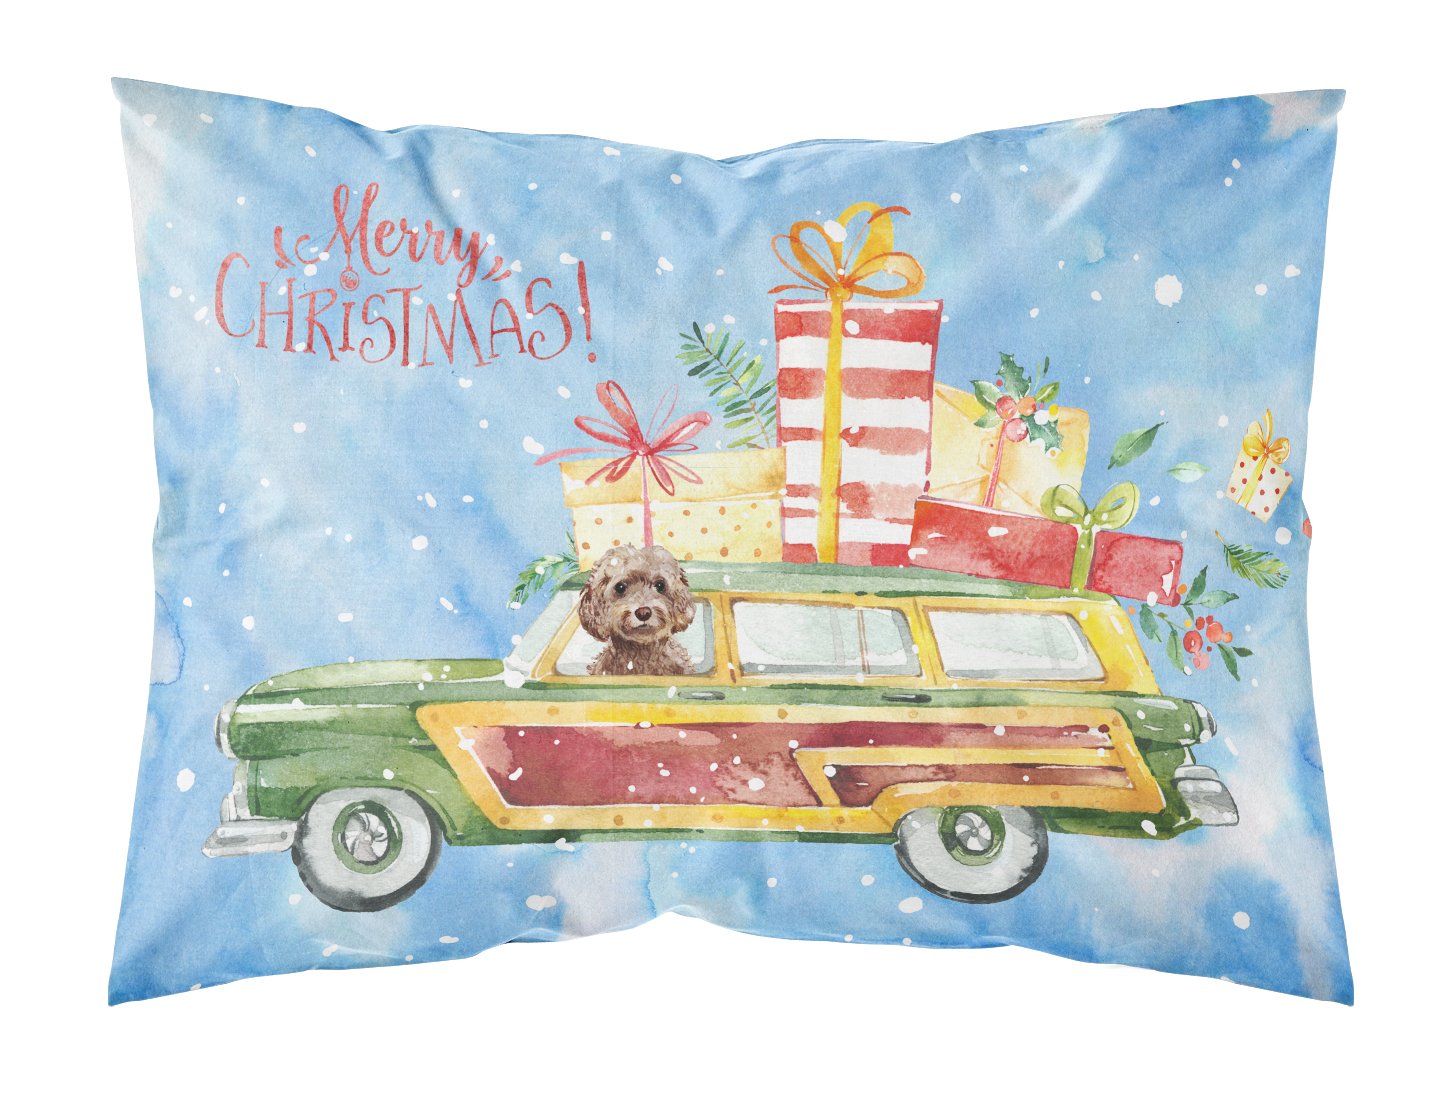 Merry Christmas Brown Cockapoo Fabric Standard Pillowcase CK2446PILLOWCASE by Caroline's Treasures